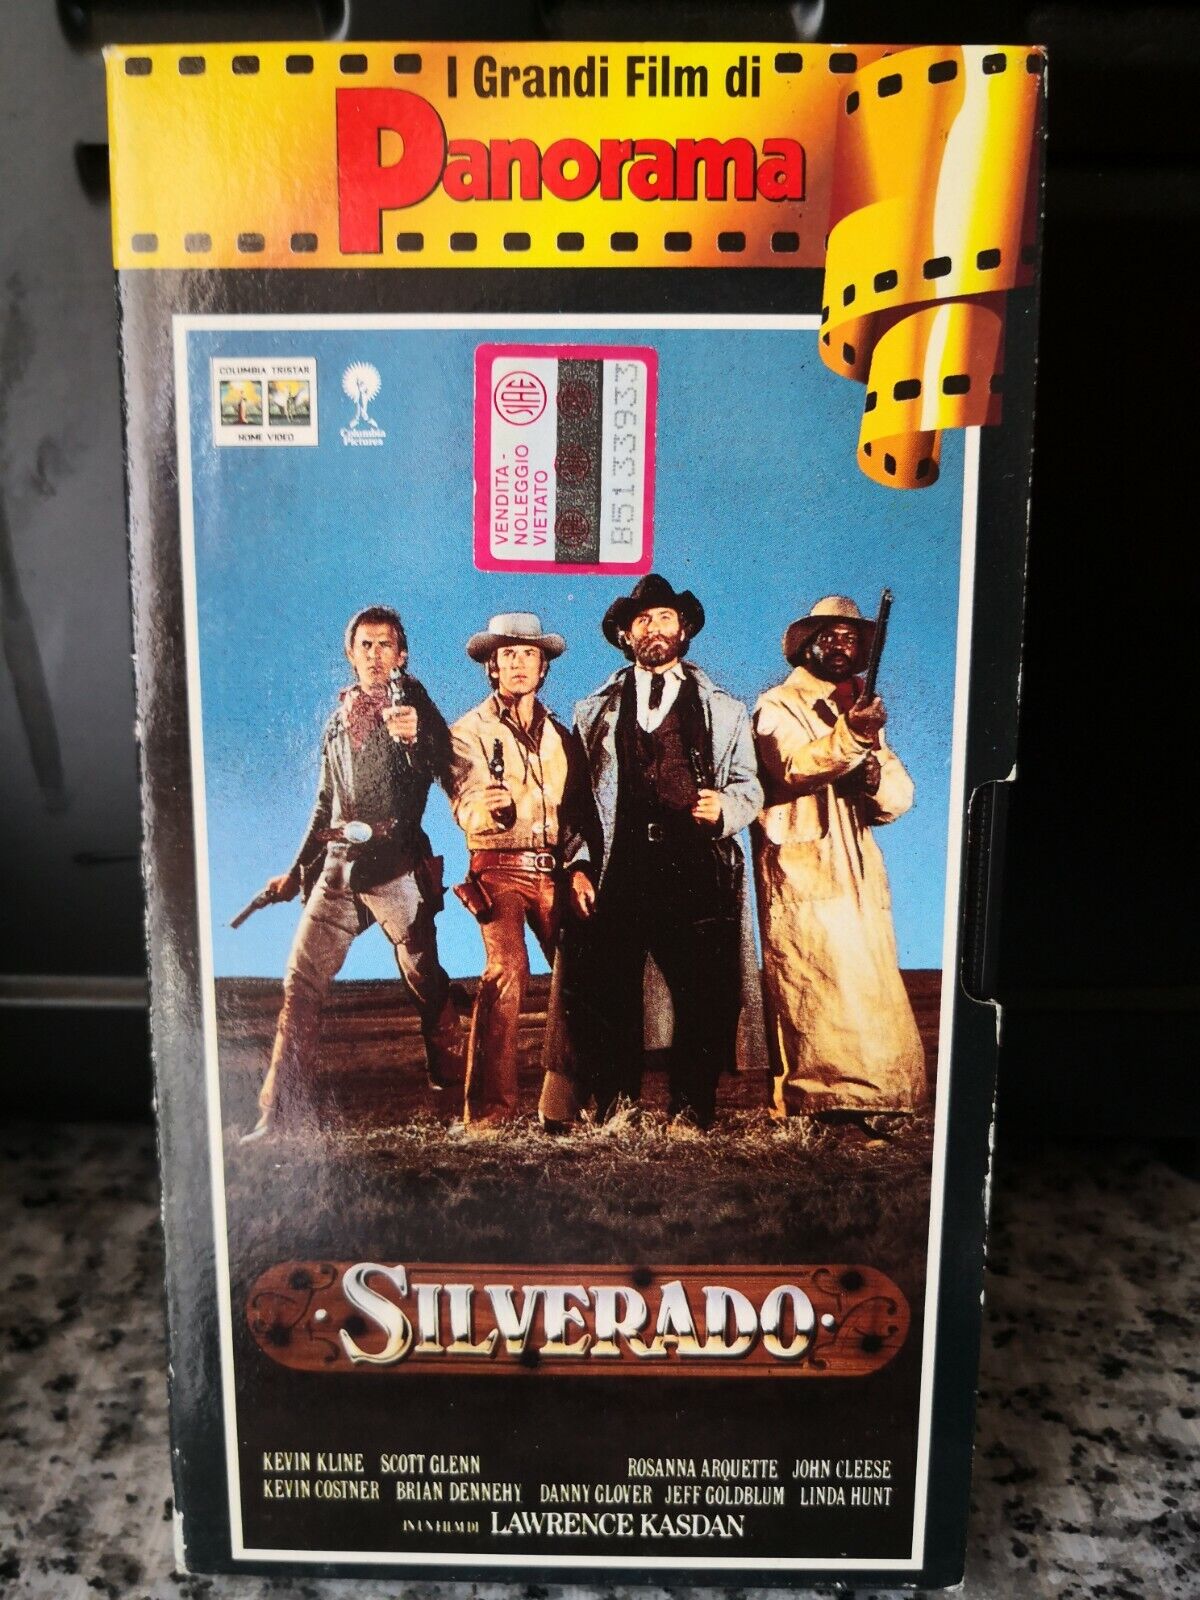 Silverado - Vhs - 1985 - Panorama -F vhs usato